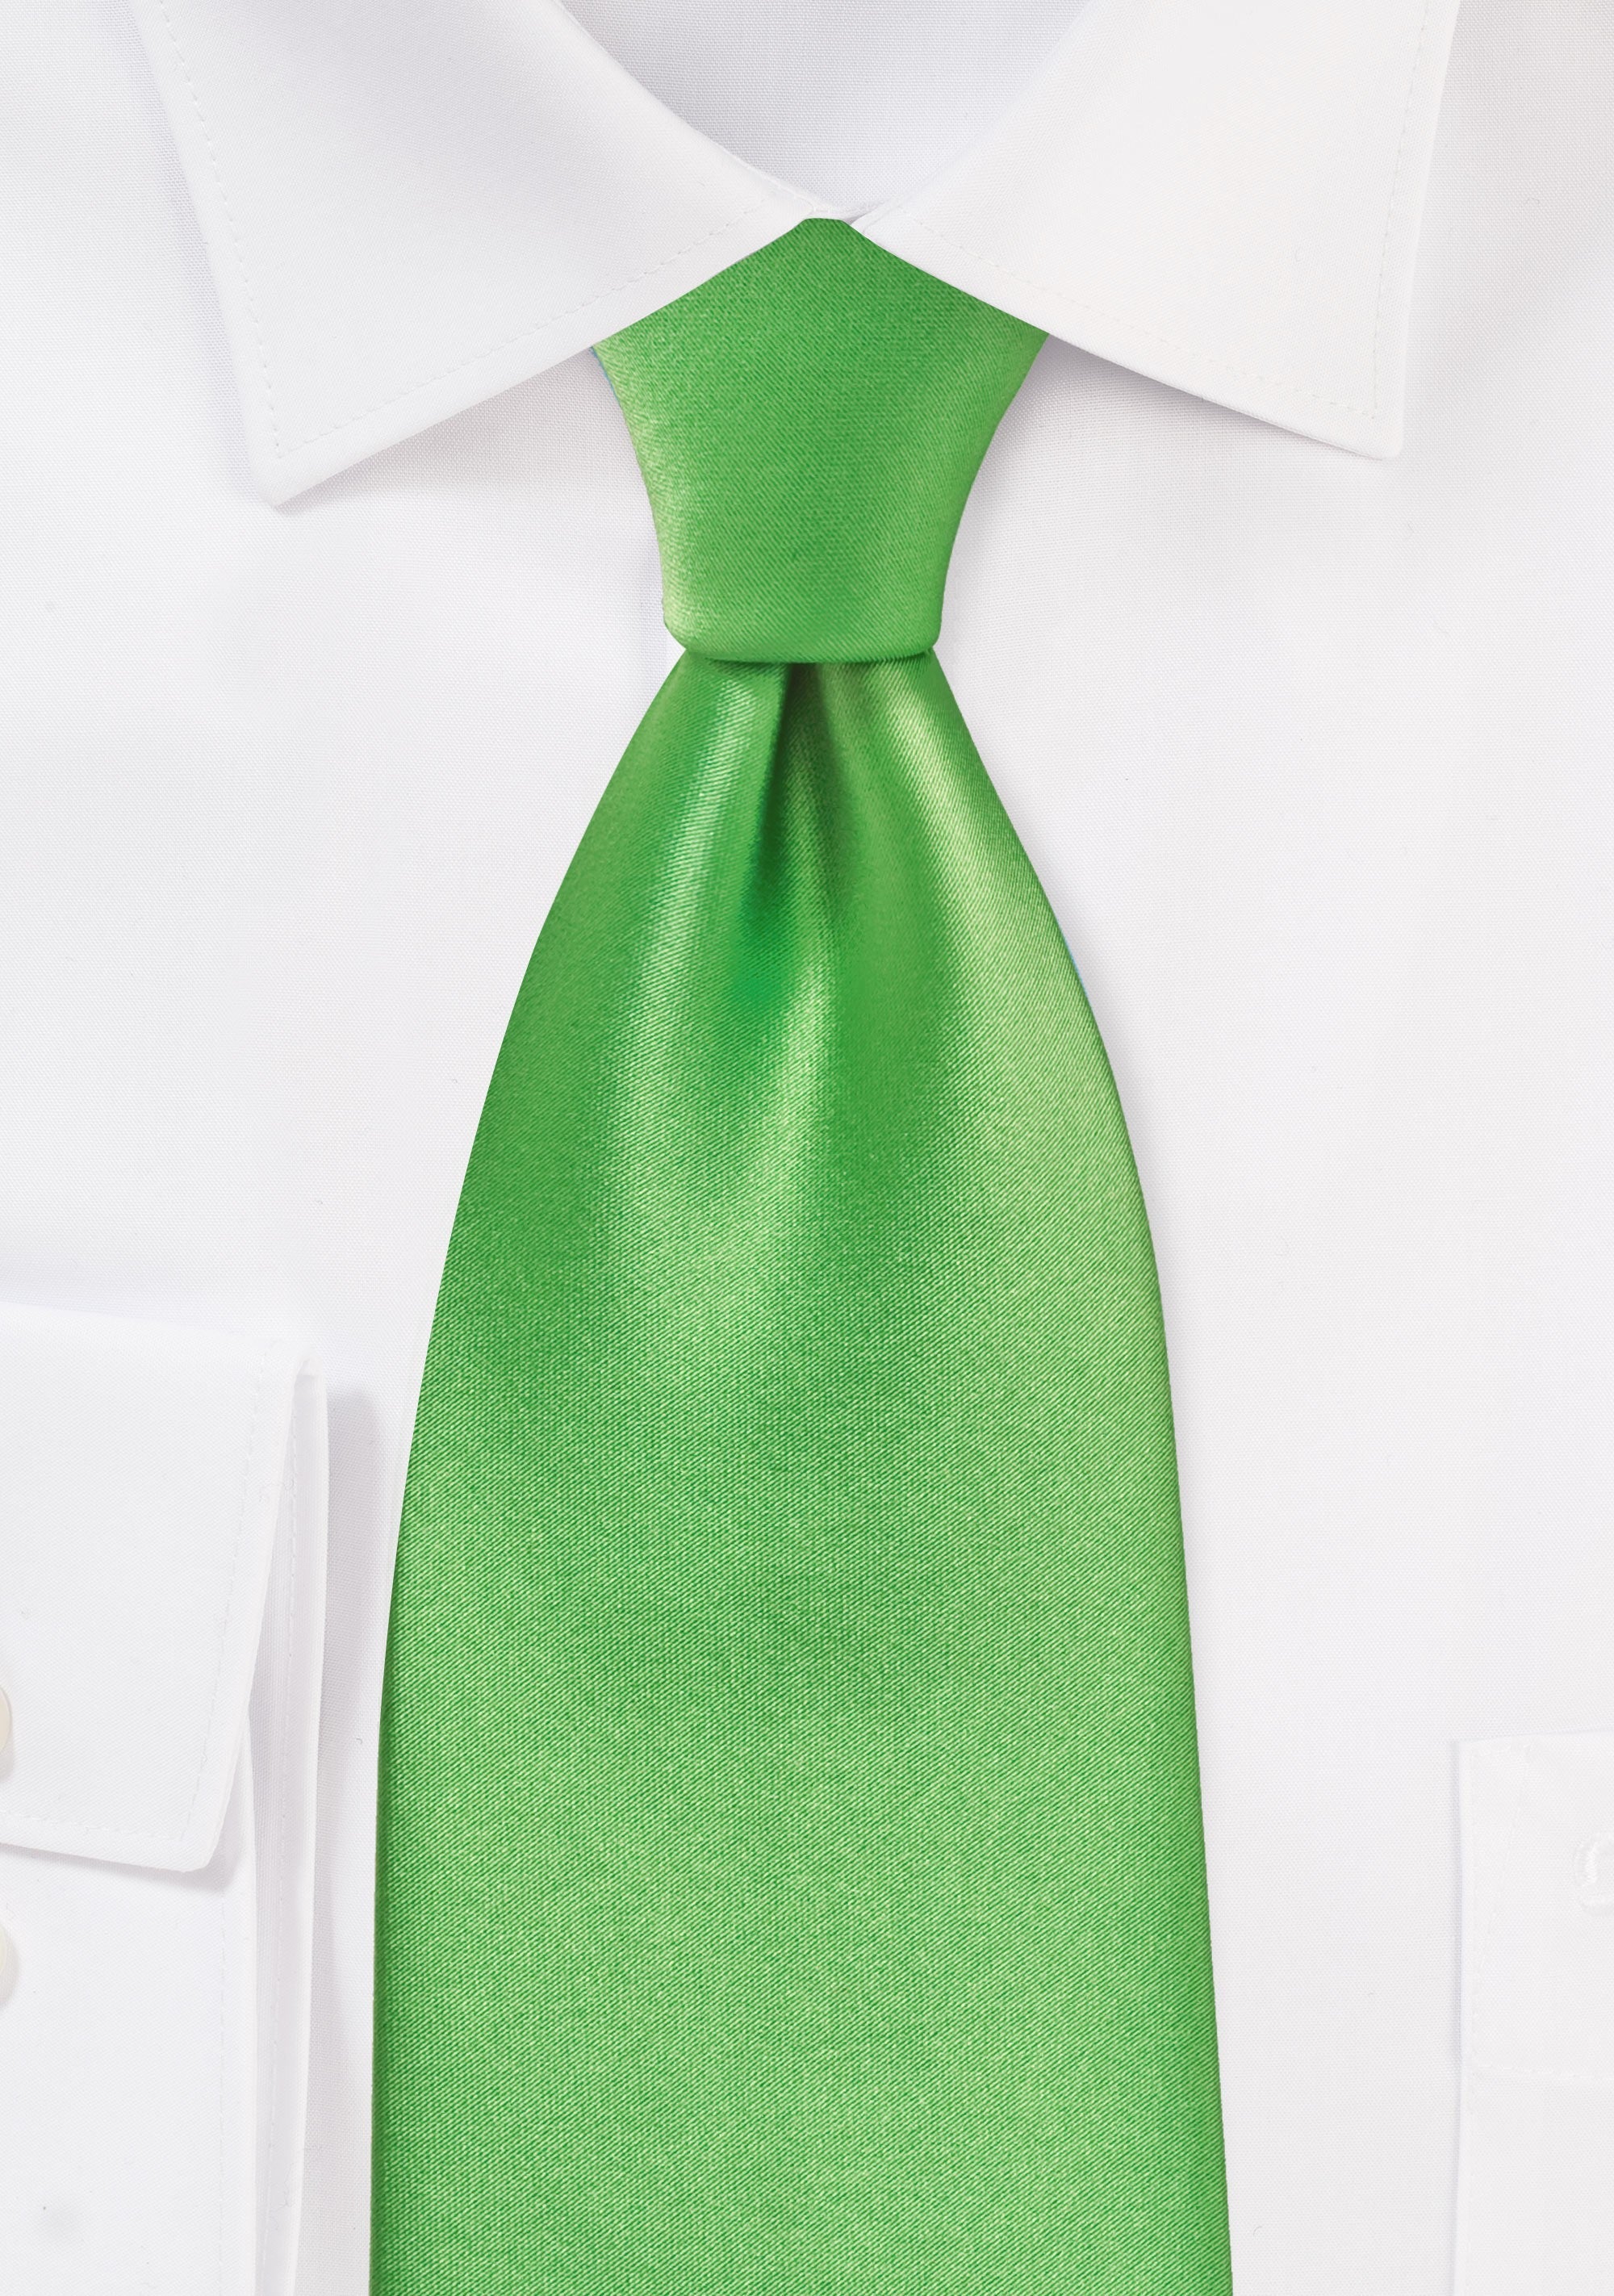 Kelly Green Solid Necktie